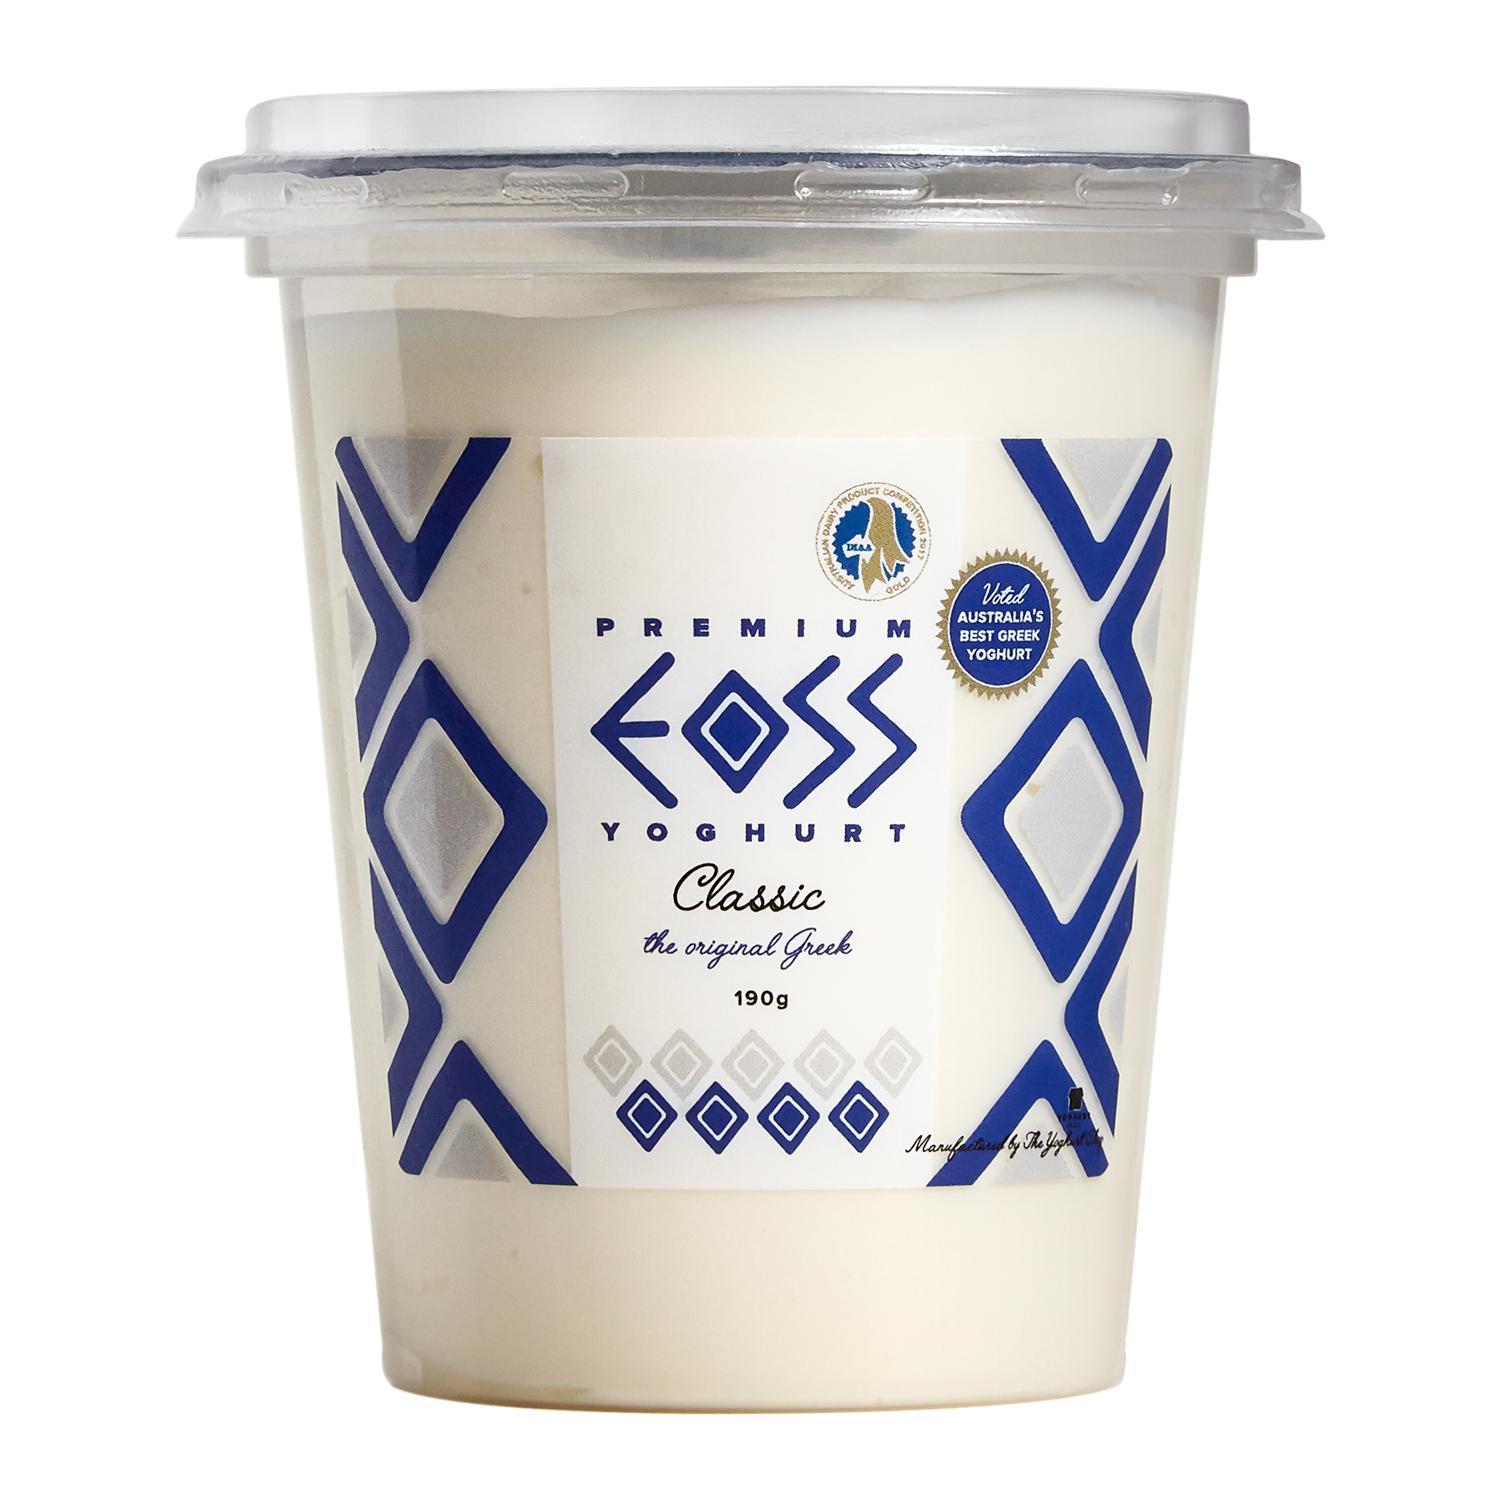 EOSS Yoghurt Classic Cup 190g